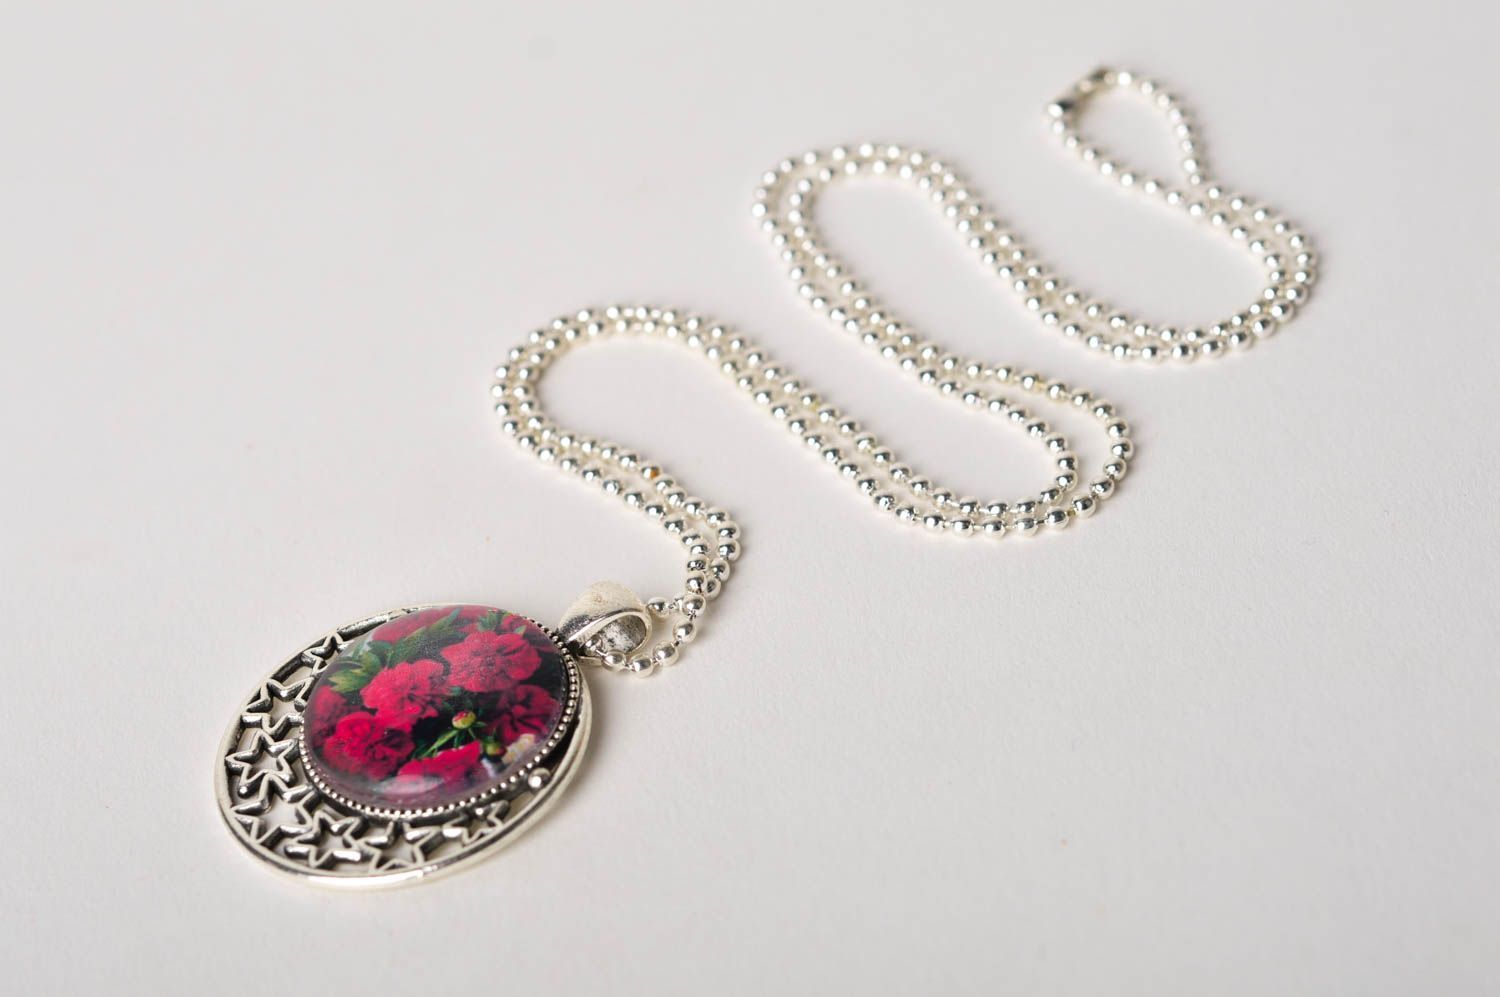 Handmade pendant with delicate print pendant on long chain designer jewelry photo 3